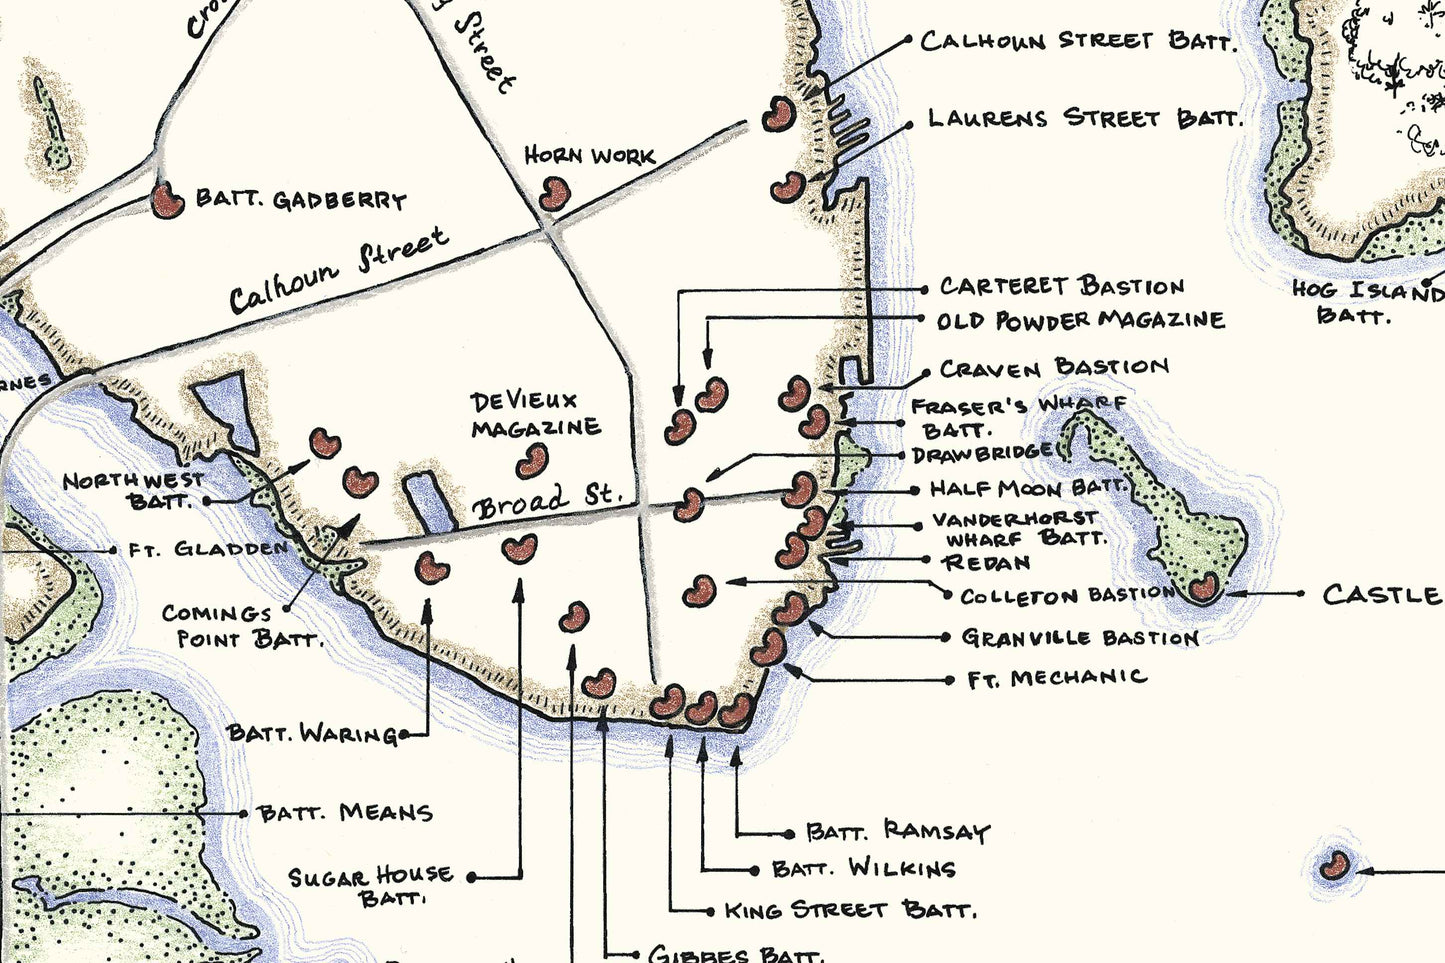 Revolutionary & Civil War Fortifications of Charleston Harbor